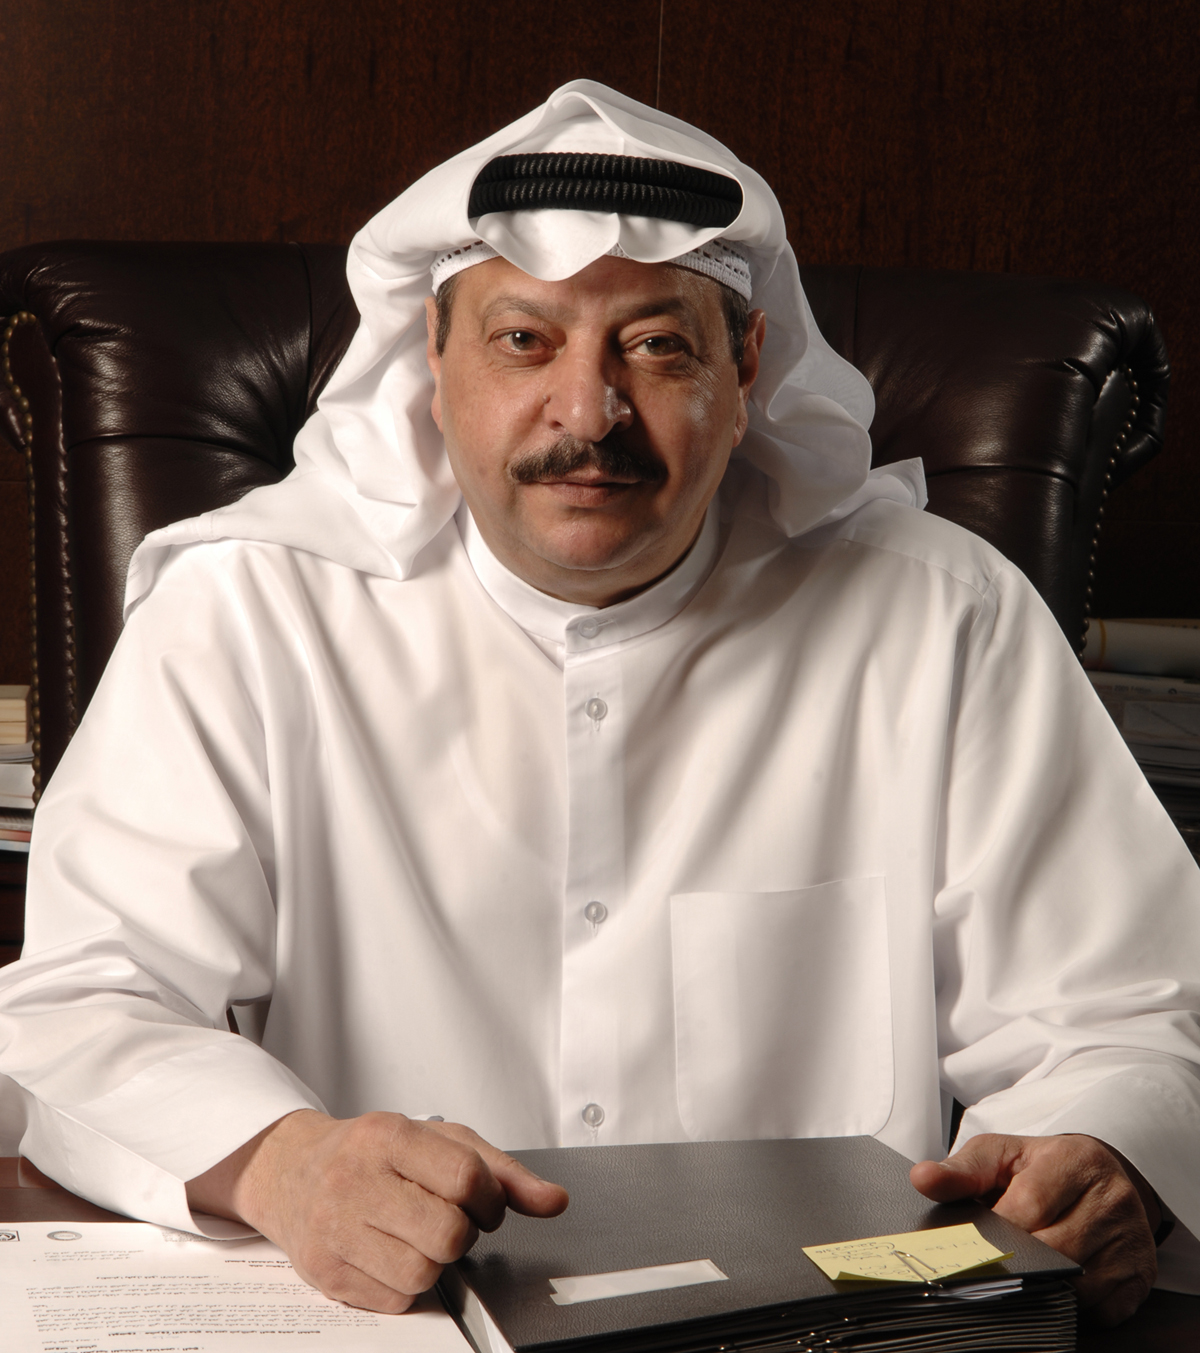 Gulf Insurance Group CEO Khaled Saoud Al Hasan